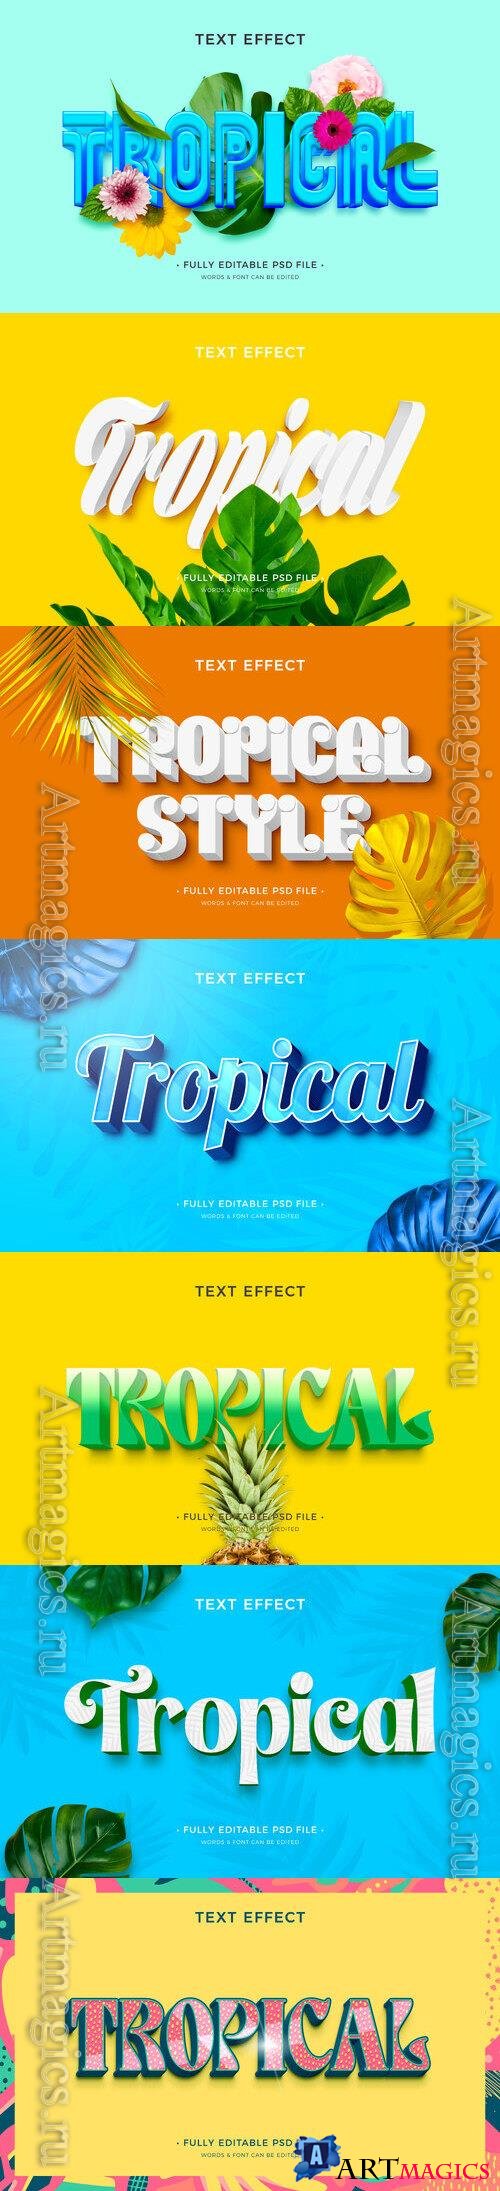 PSD tropical text effect vol 1